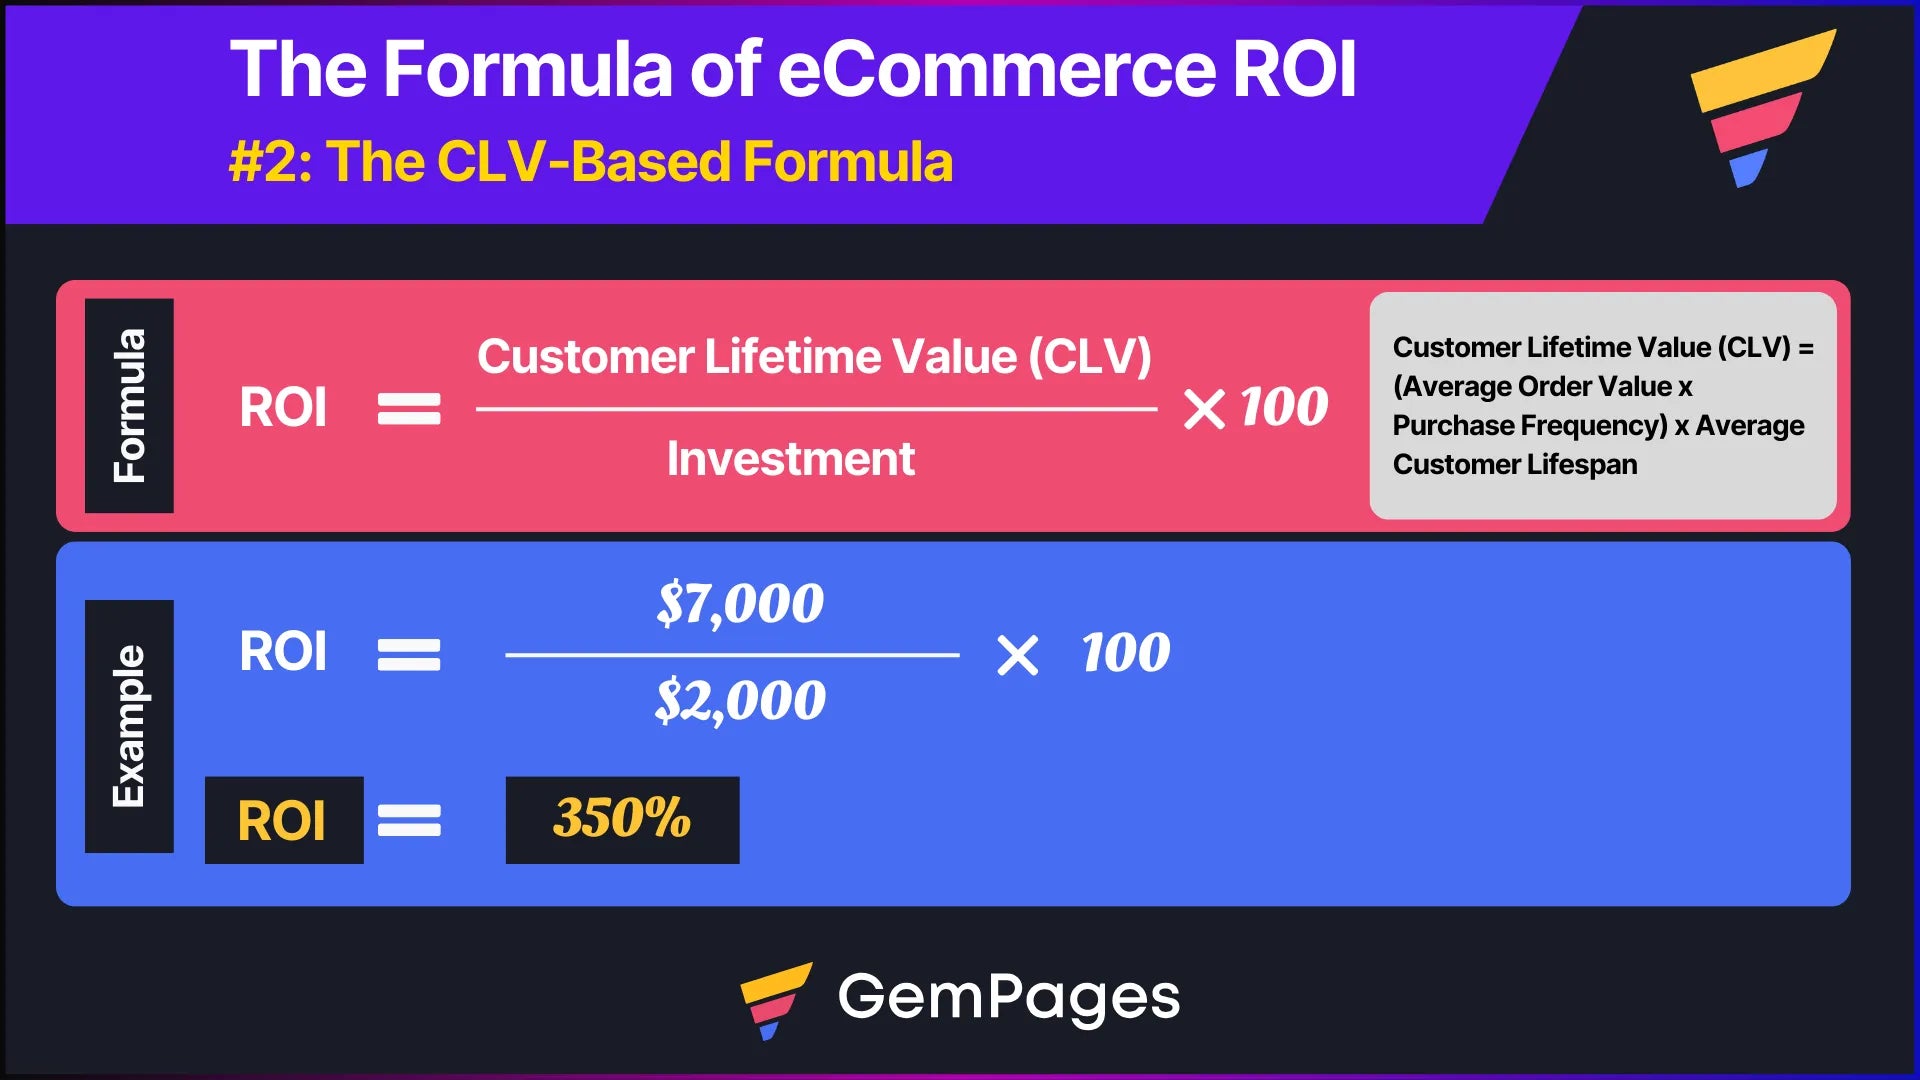 The formula of eCommerce ROI based on CLV calculation